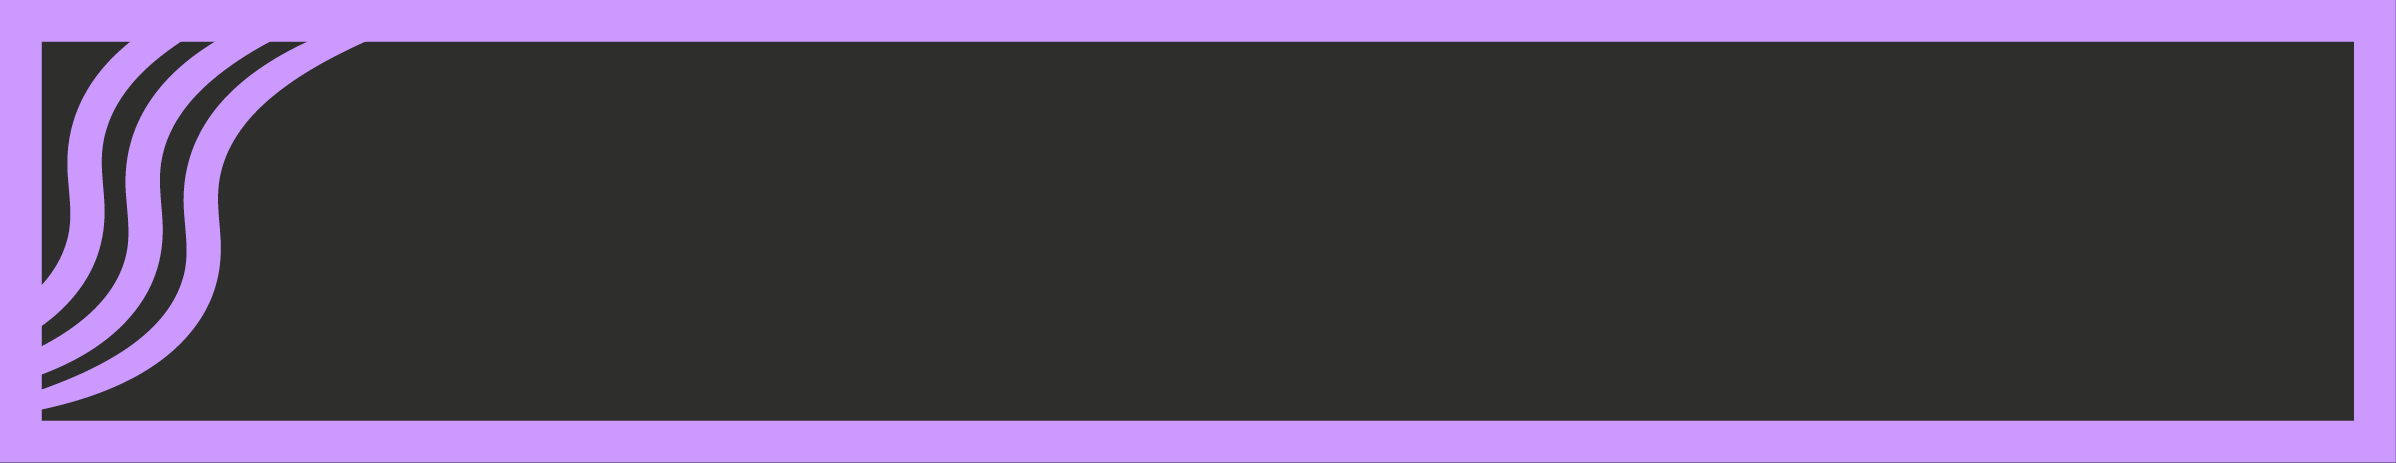 Plain black image with a purple border.